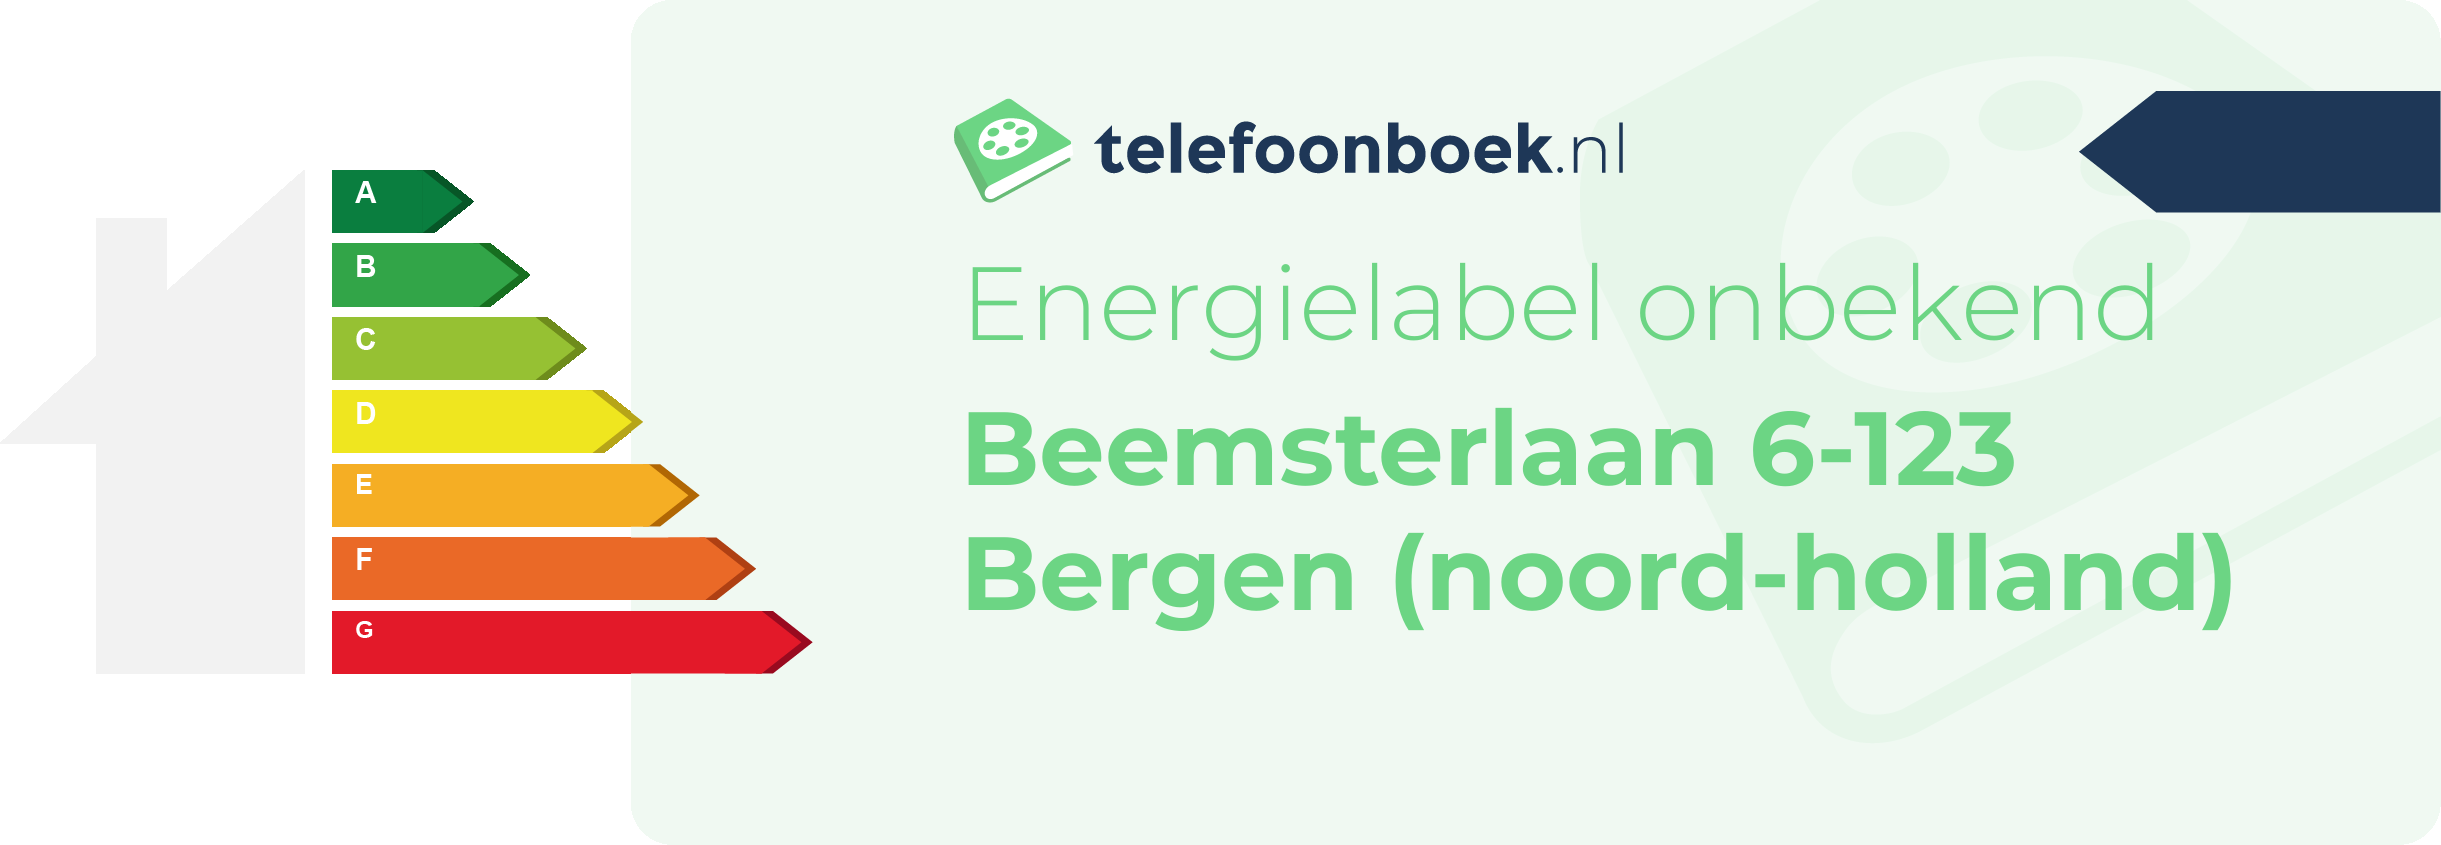 Energielabel Beemsterlaan 6-123 Bergen (Noord-Holland)